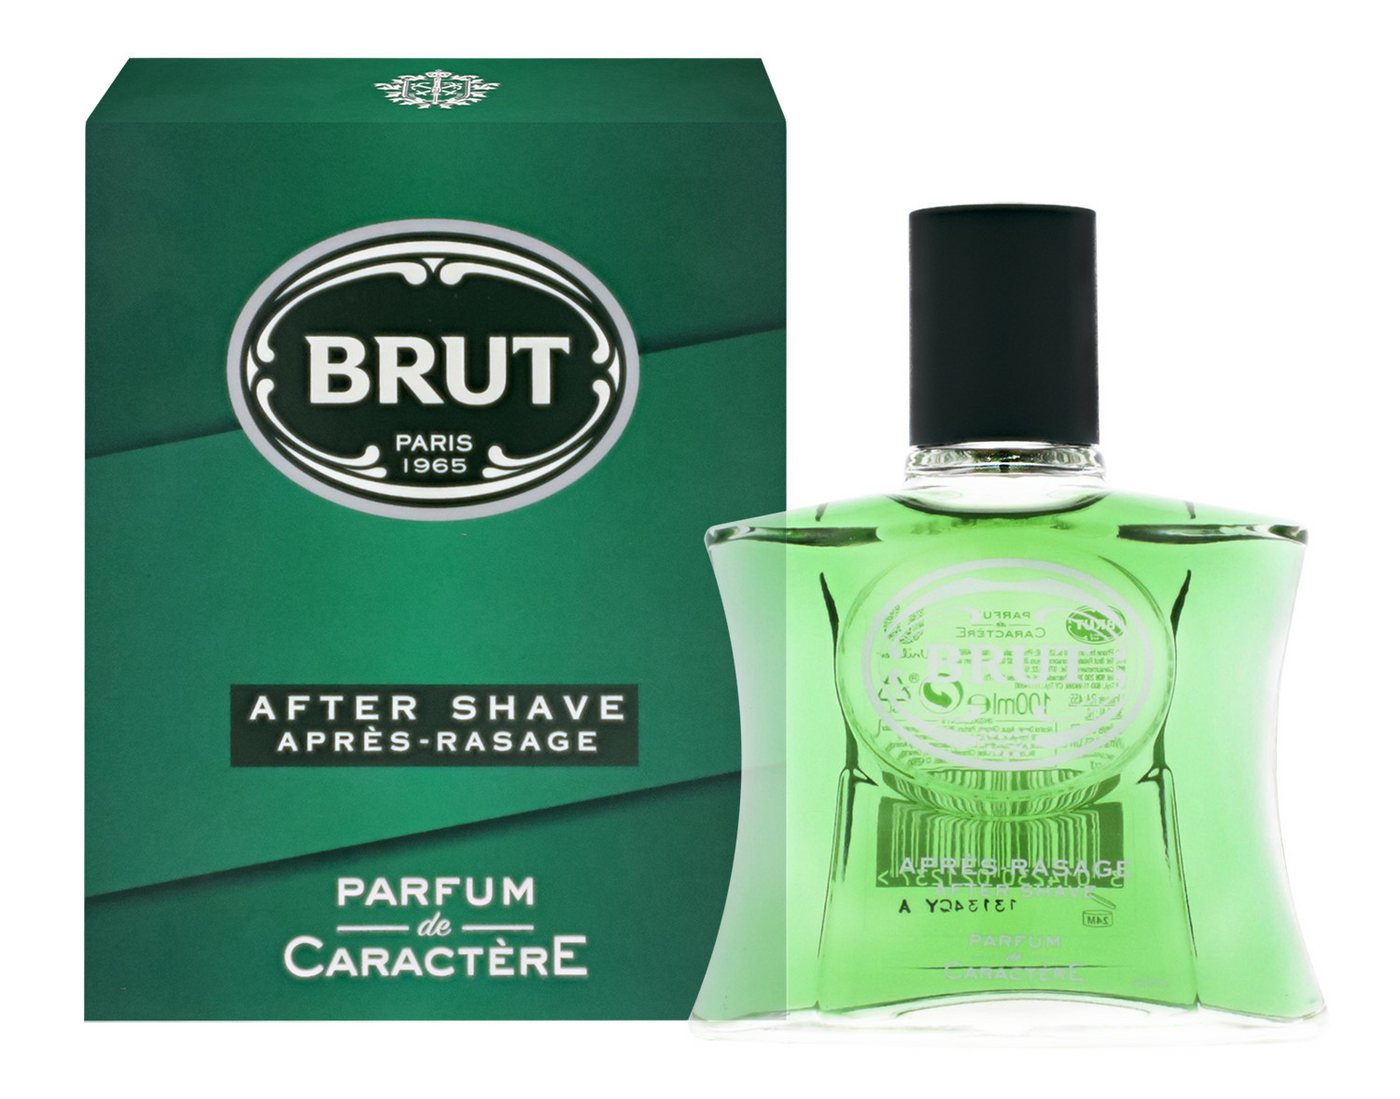 Brut After-Shave 3x Brut Original Apres-Rasage Aftershave je 100ml Rasierwasser for man von Brut